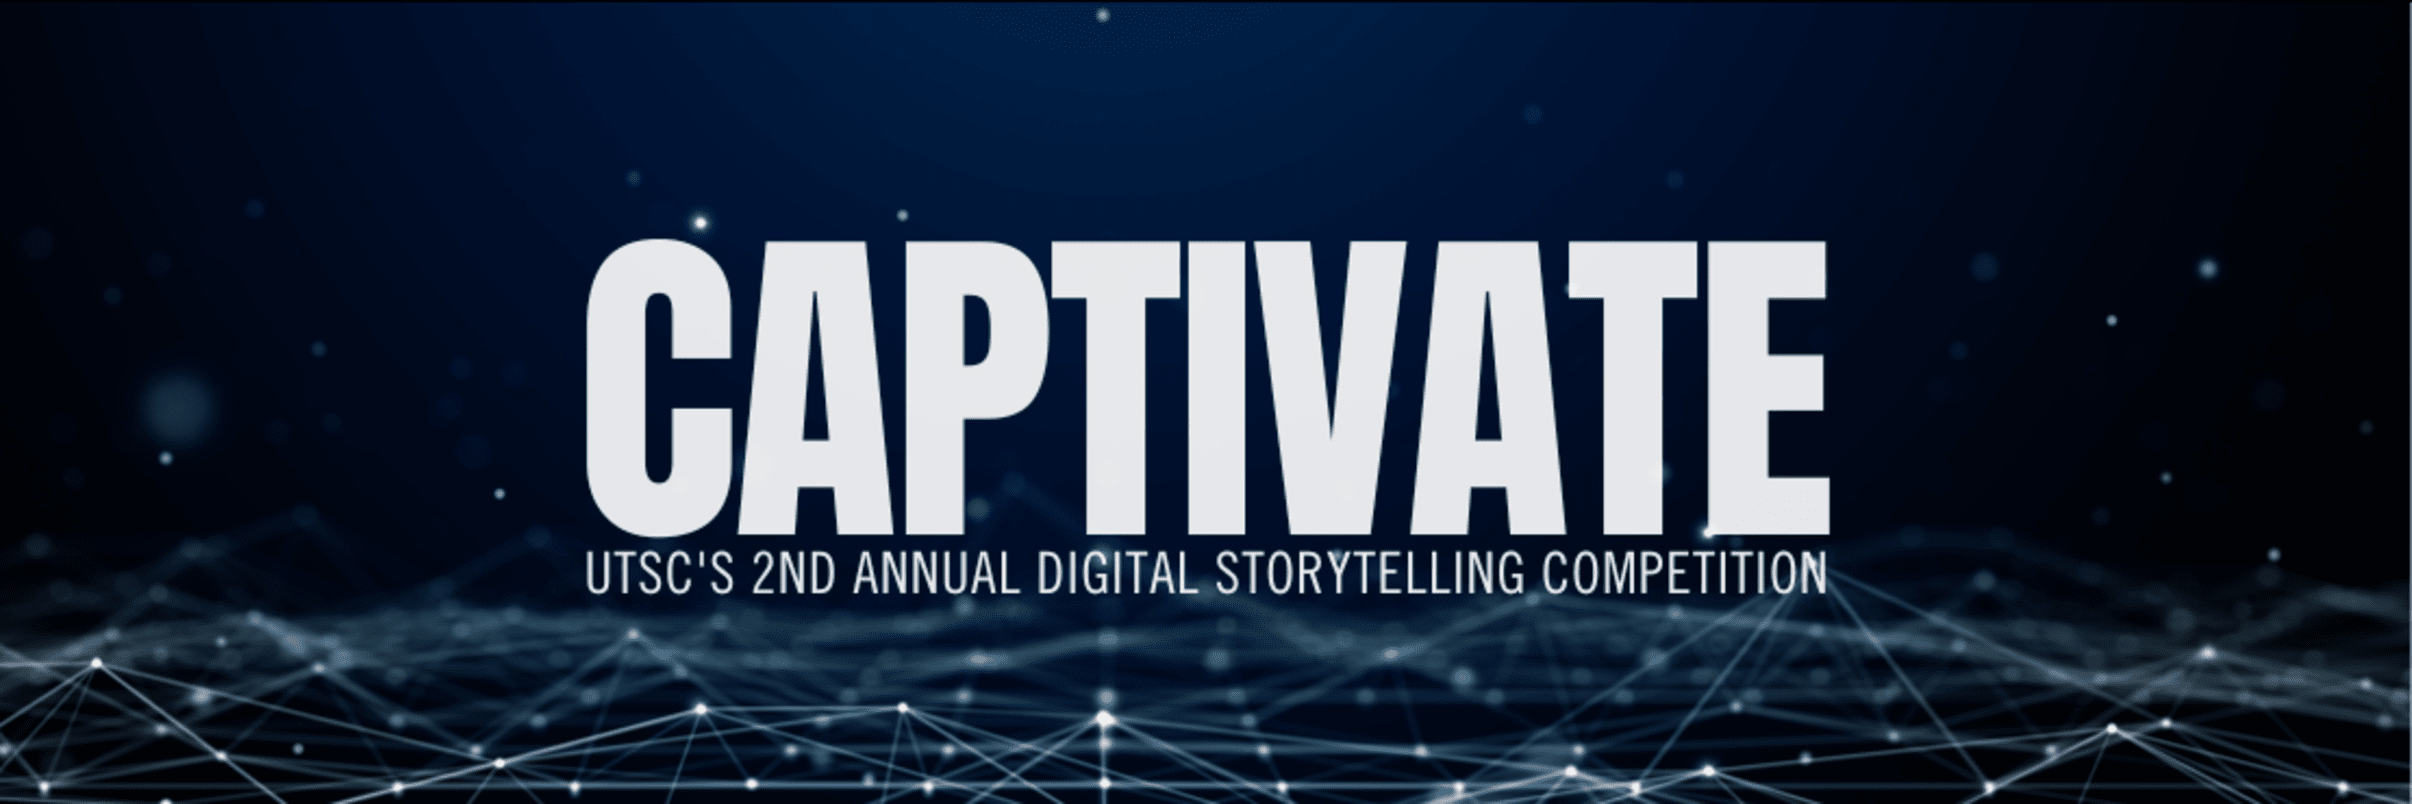 Captivate: Essentials of Digital Storytelling